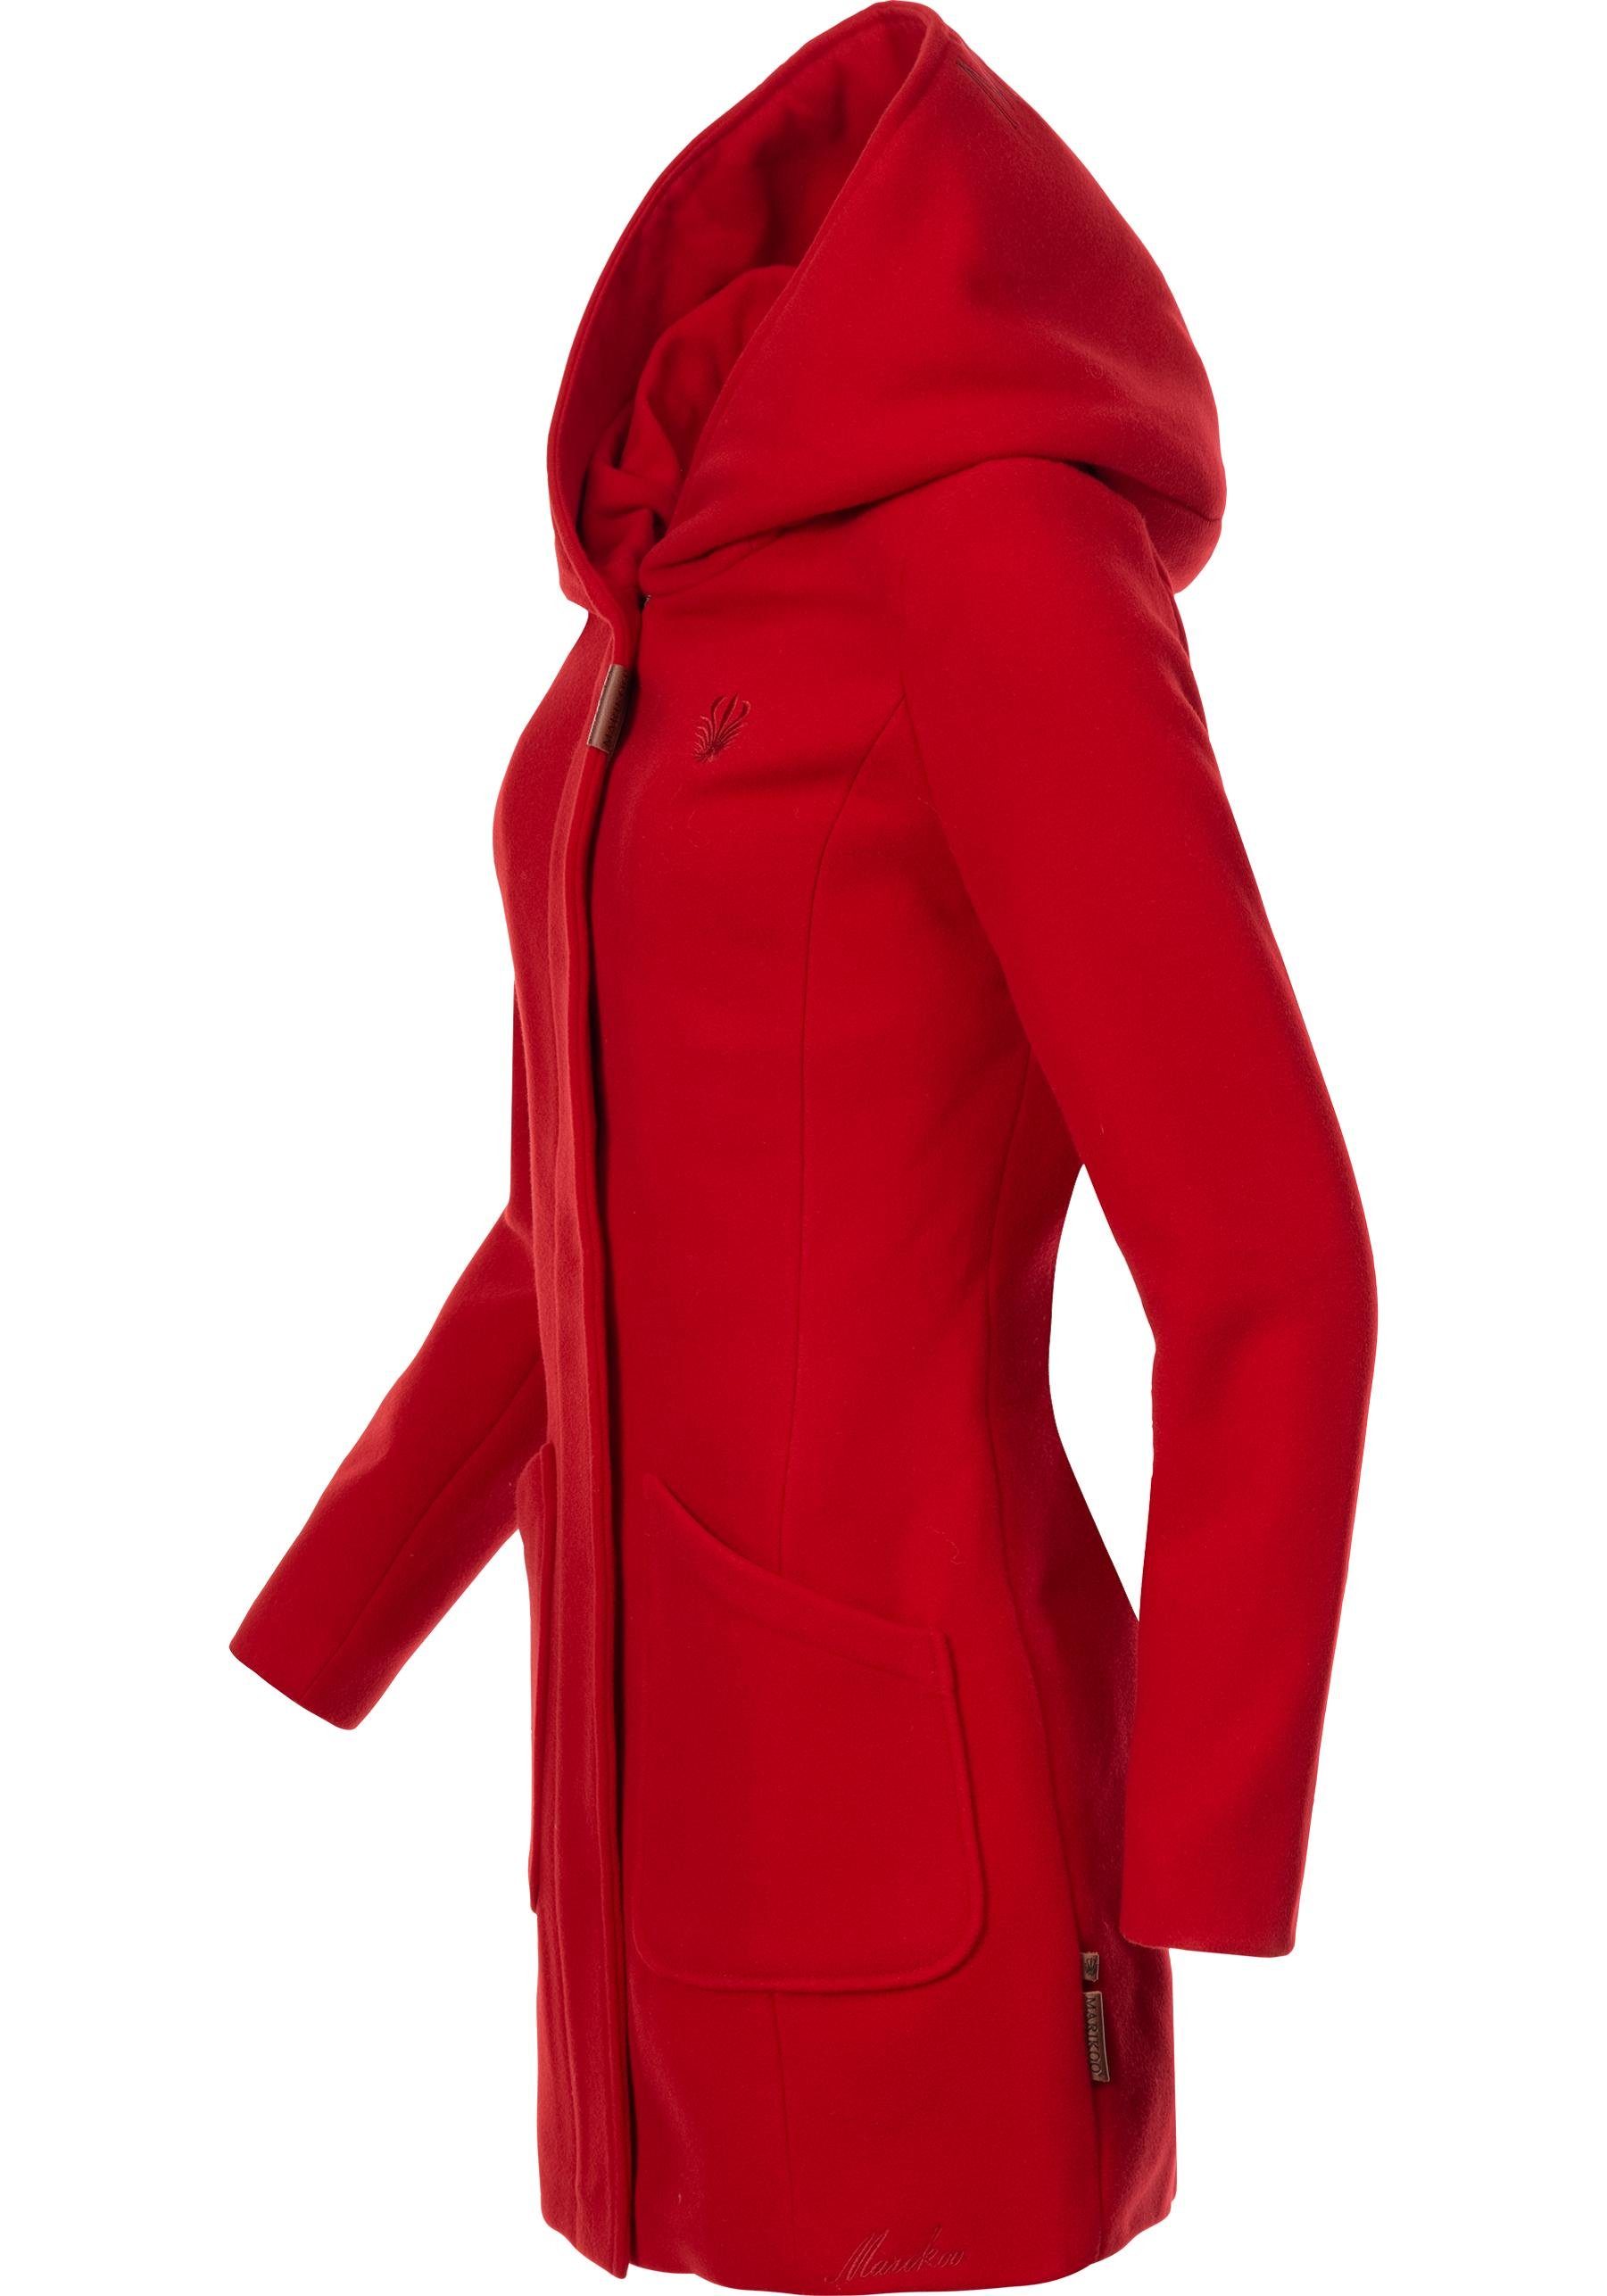 rot hochwertiger Wintermantel Marikoo mit Kapuze großer Maikoo Mantel